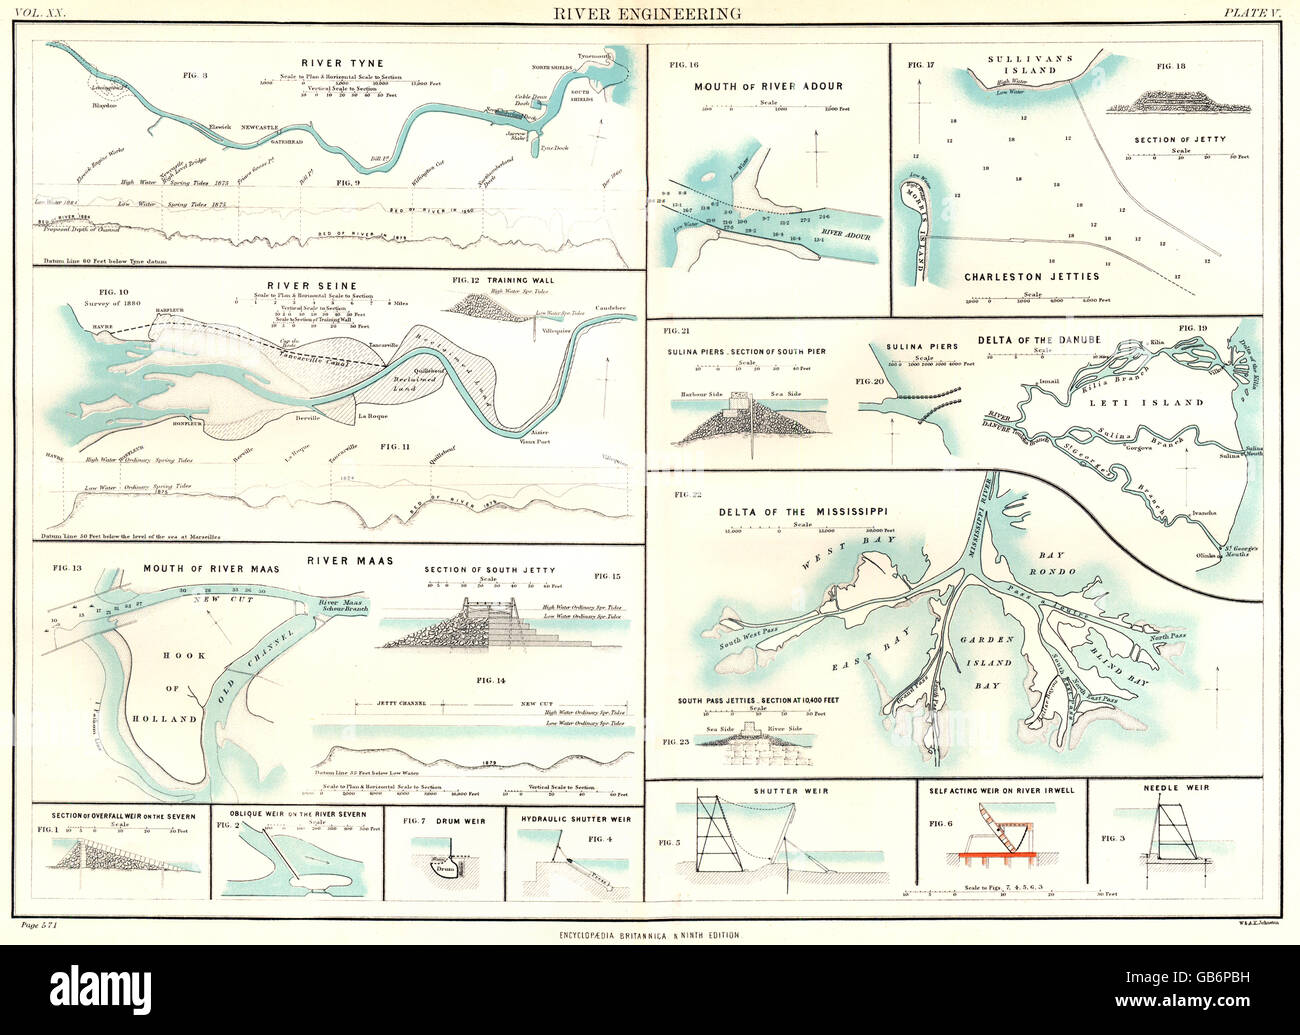 Ingegneria Fluviale: Tyne Adour Senna Danubio Maas Mississippi Charleston, 1898 Mappa Foto Stock